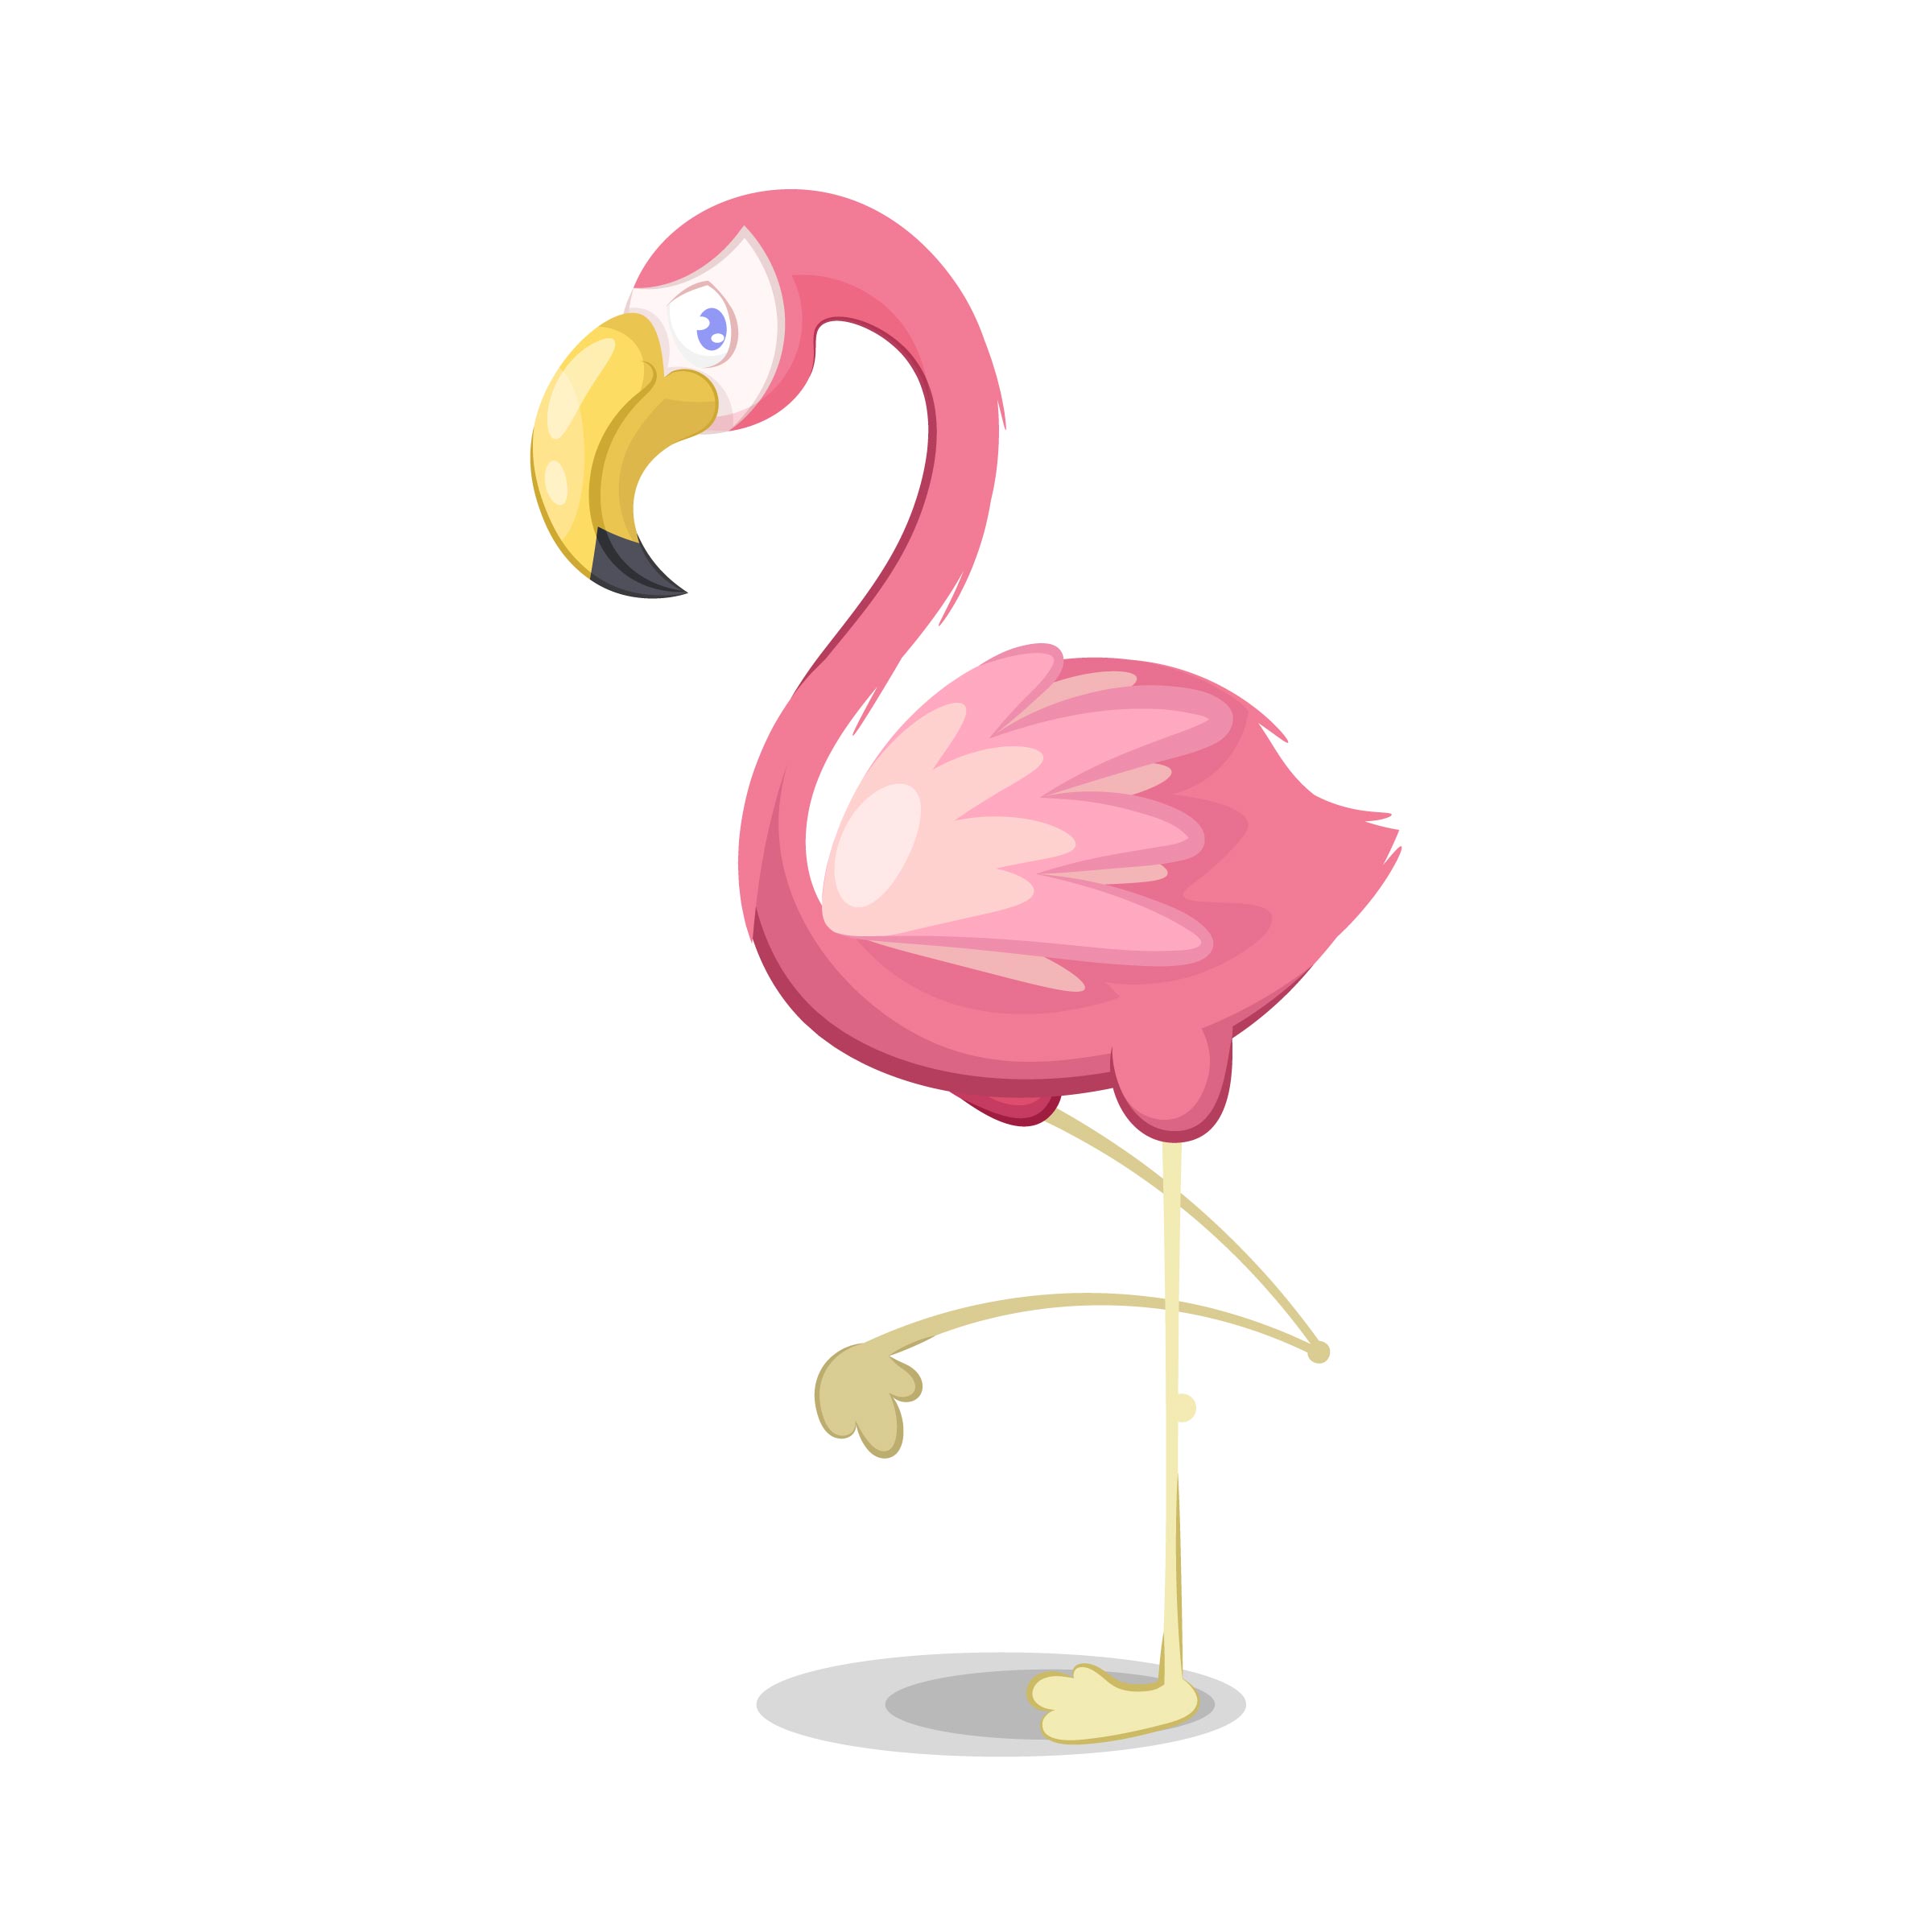 Illustration of pink flamingo Download Free Vectors